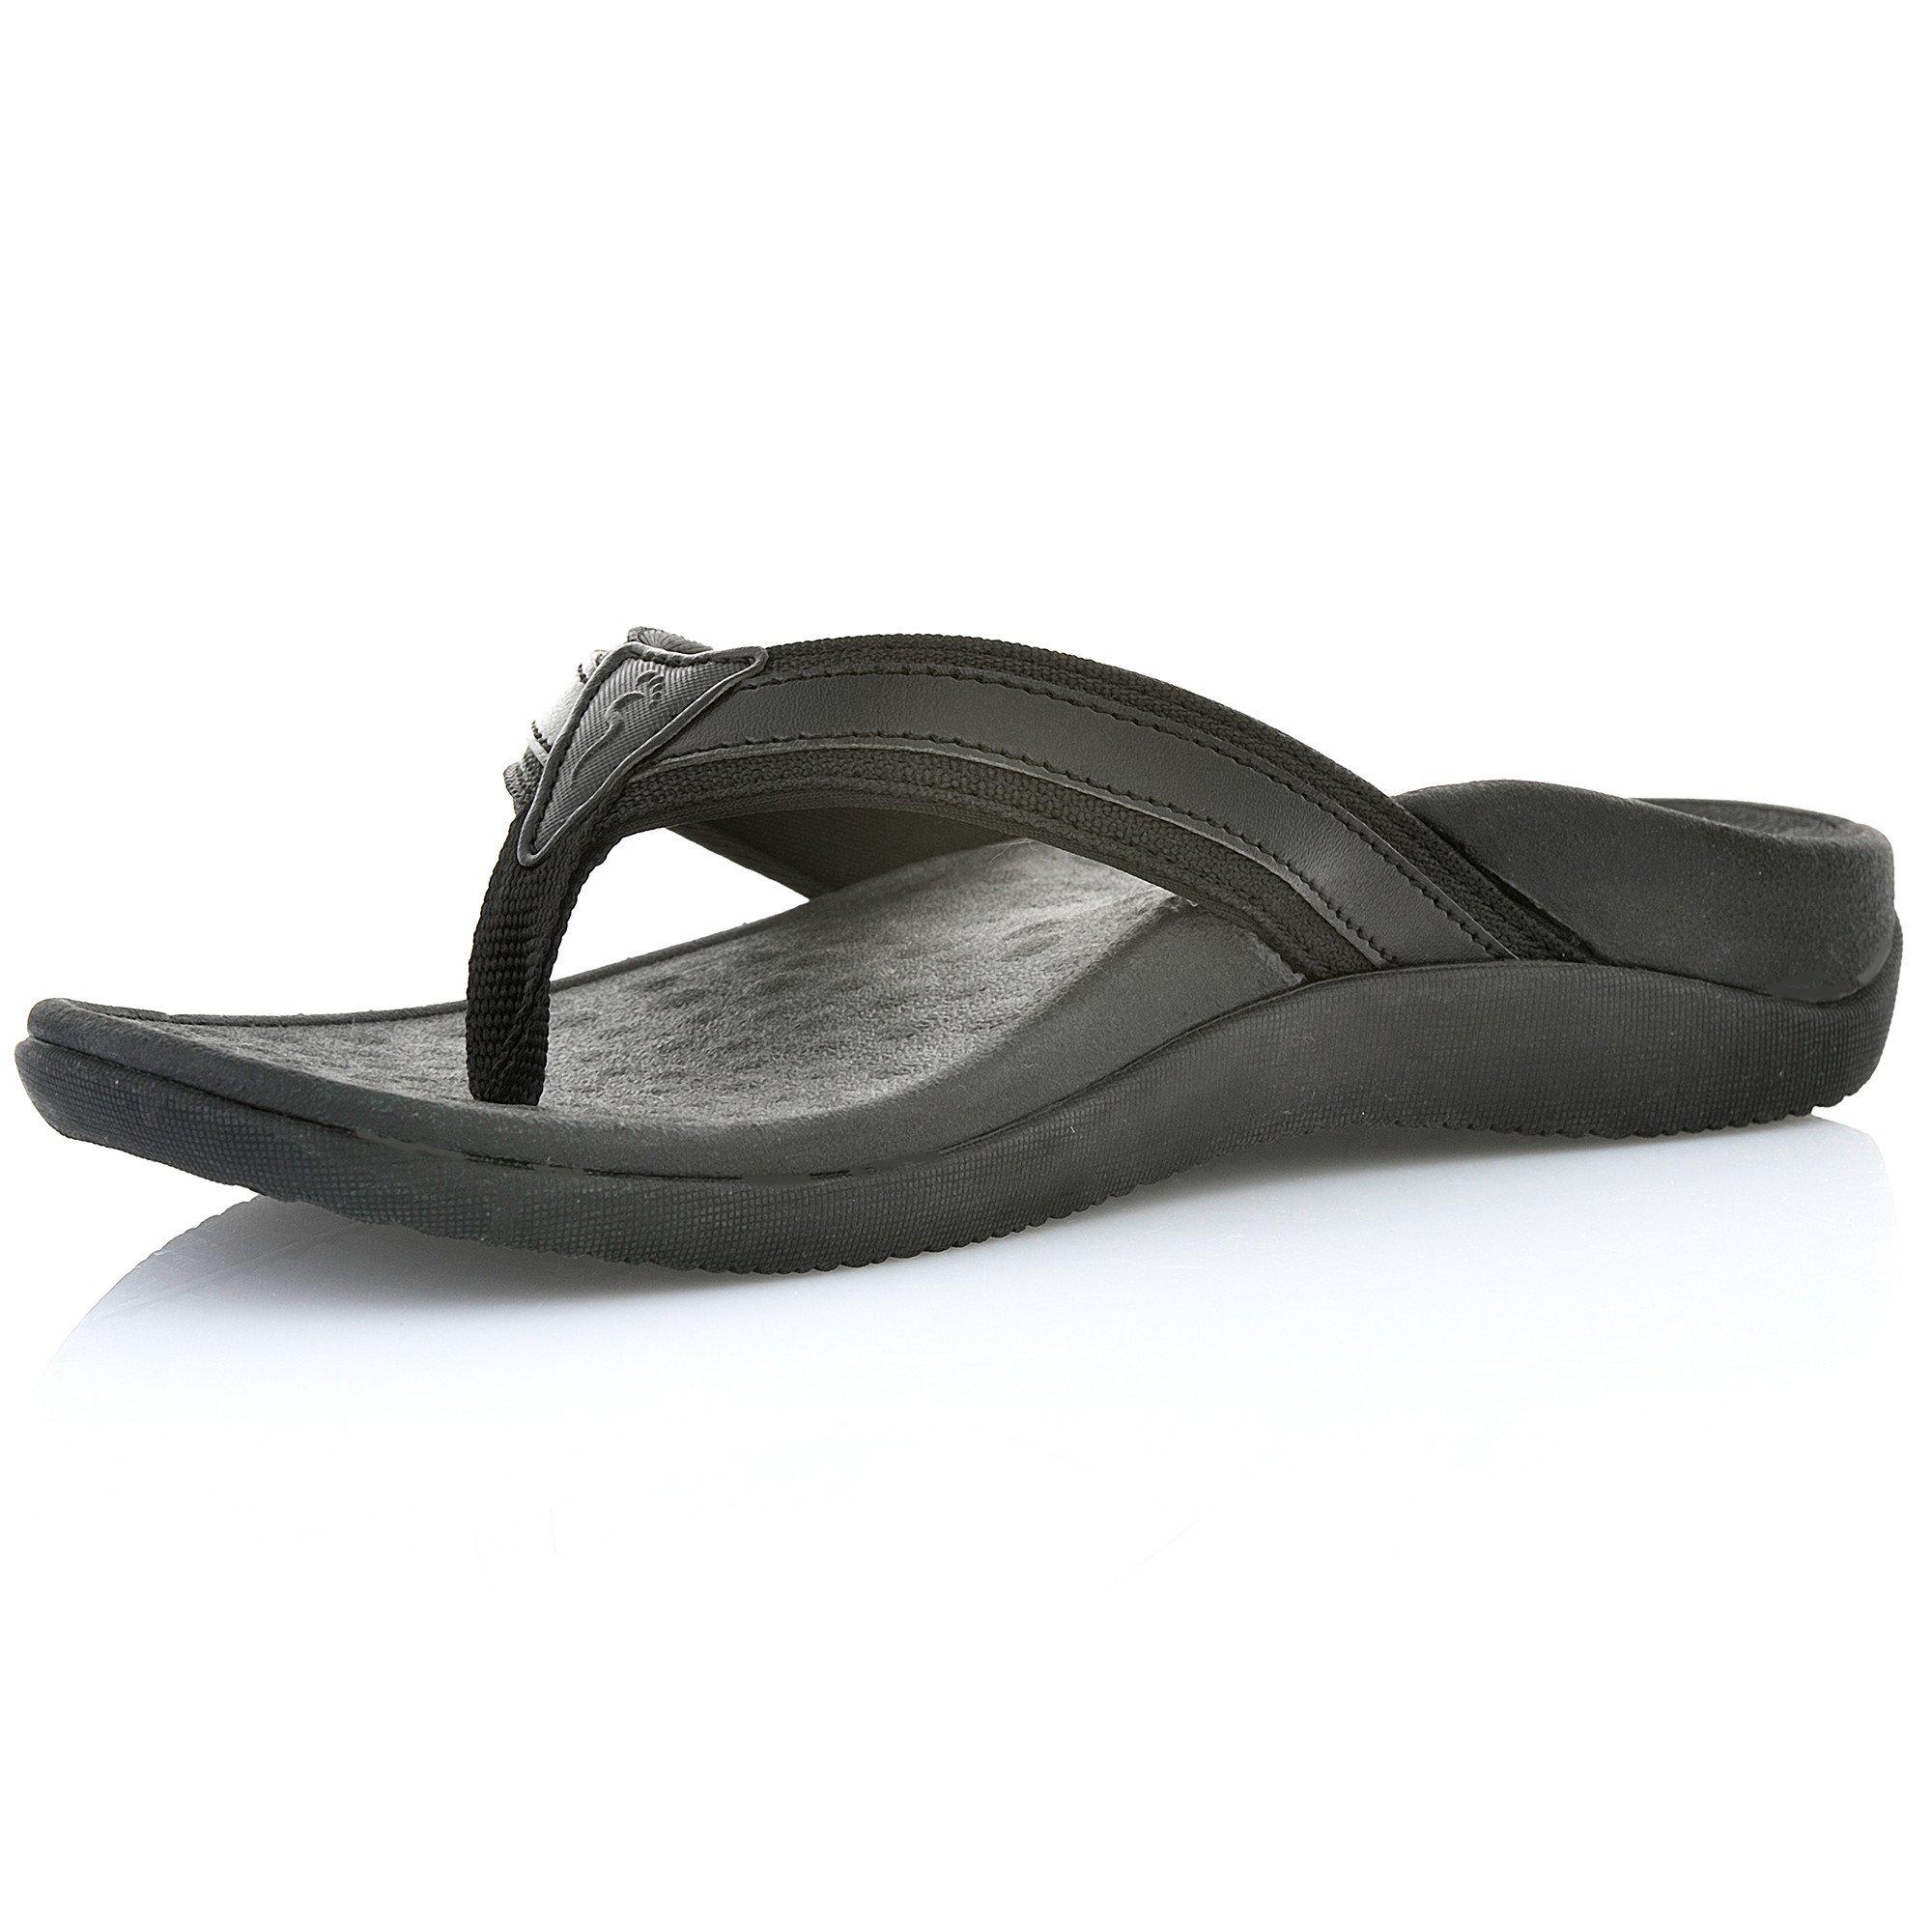 Orthotic Sandals (Pair) - Support Flip-Flops for Men Women